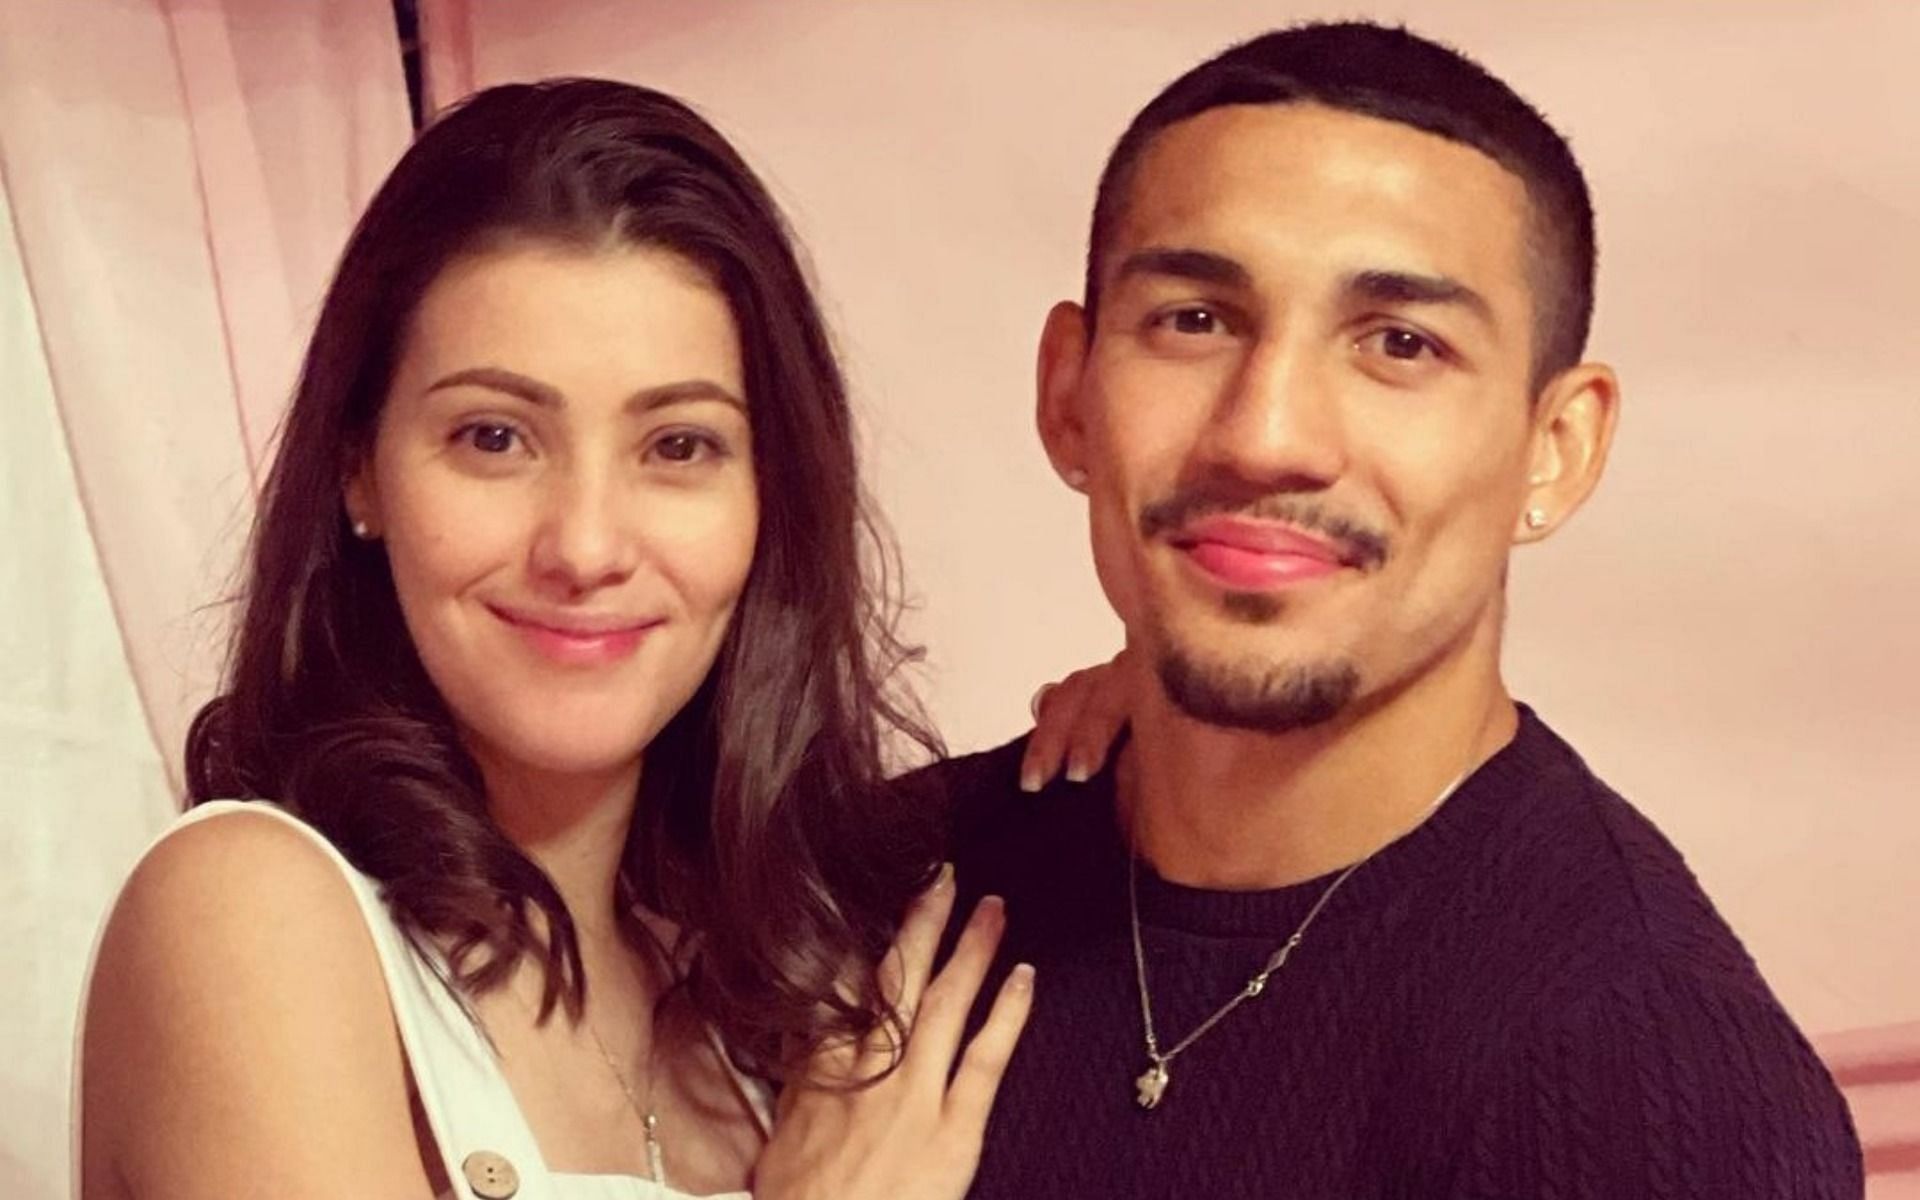 Teofimo Lopez (right) with his wife Cynthia Lopez (left) [Image Credit: @teofimolopez on Instagram]